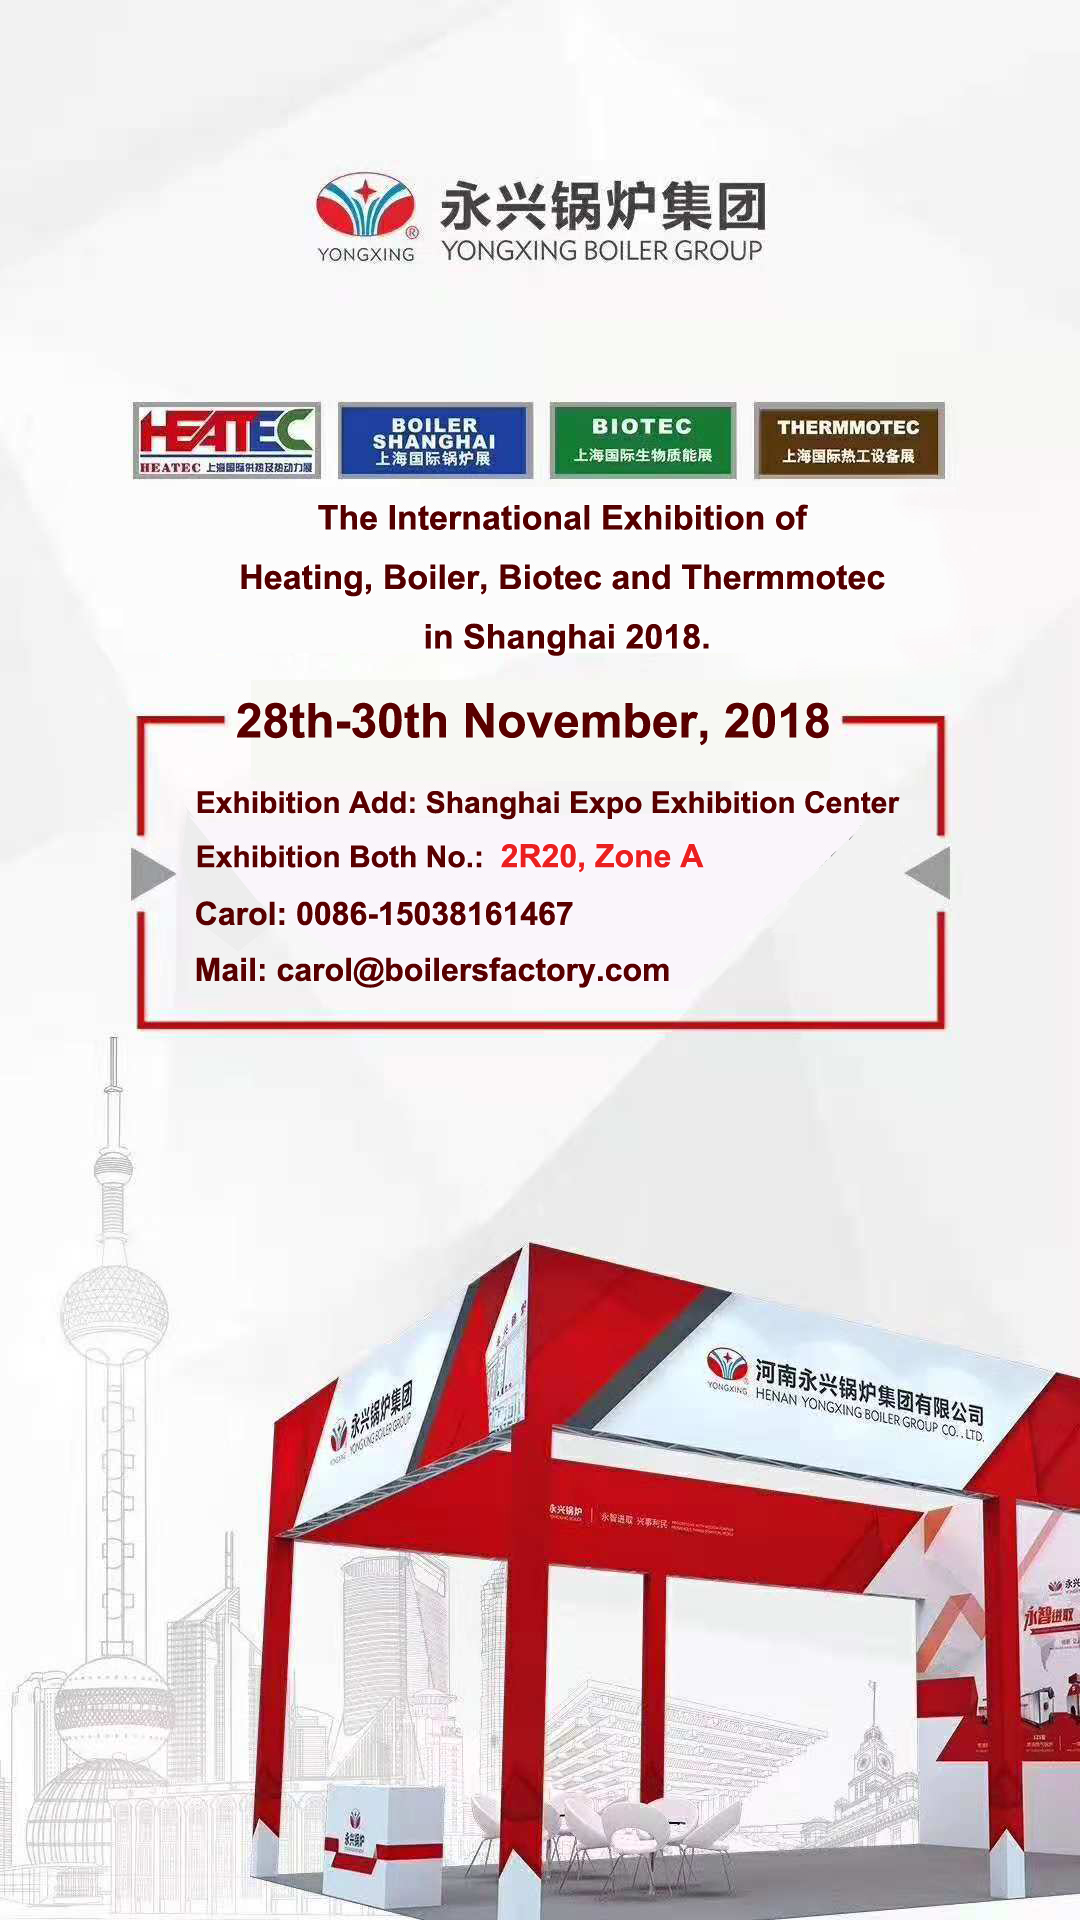 The International Boiler Exhibition in Shanghai 2018